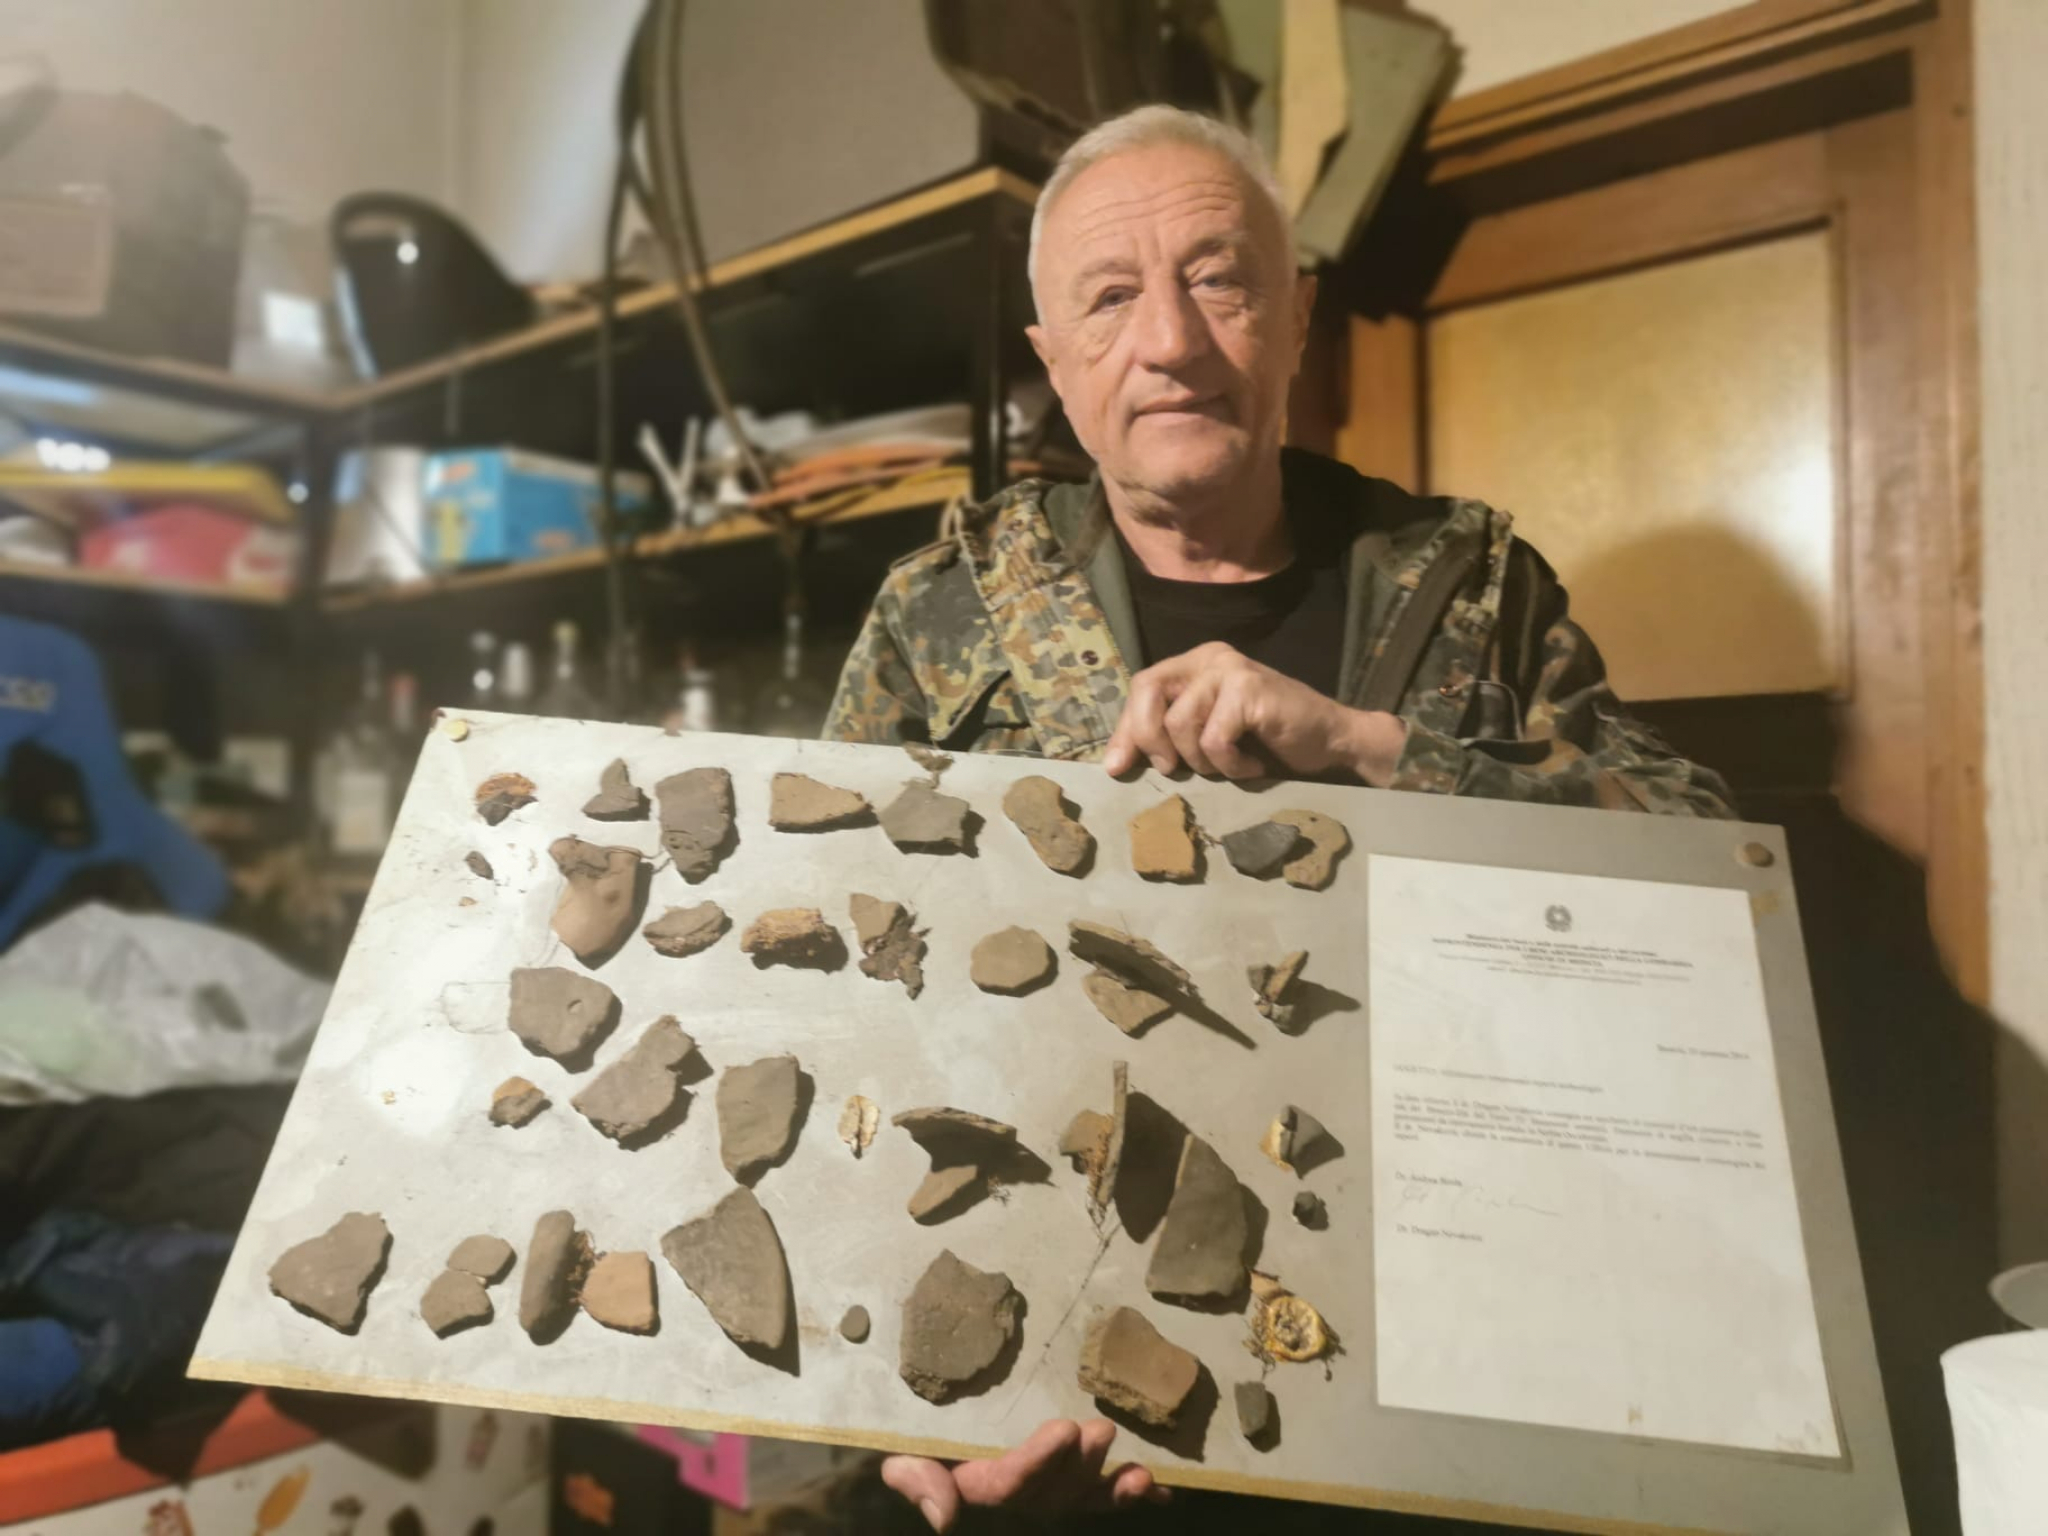 NEVEROVATNO OTKRIĆE Milan pronašao fosile puževa, a onda usledio šok (FOTO)